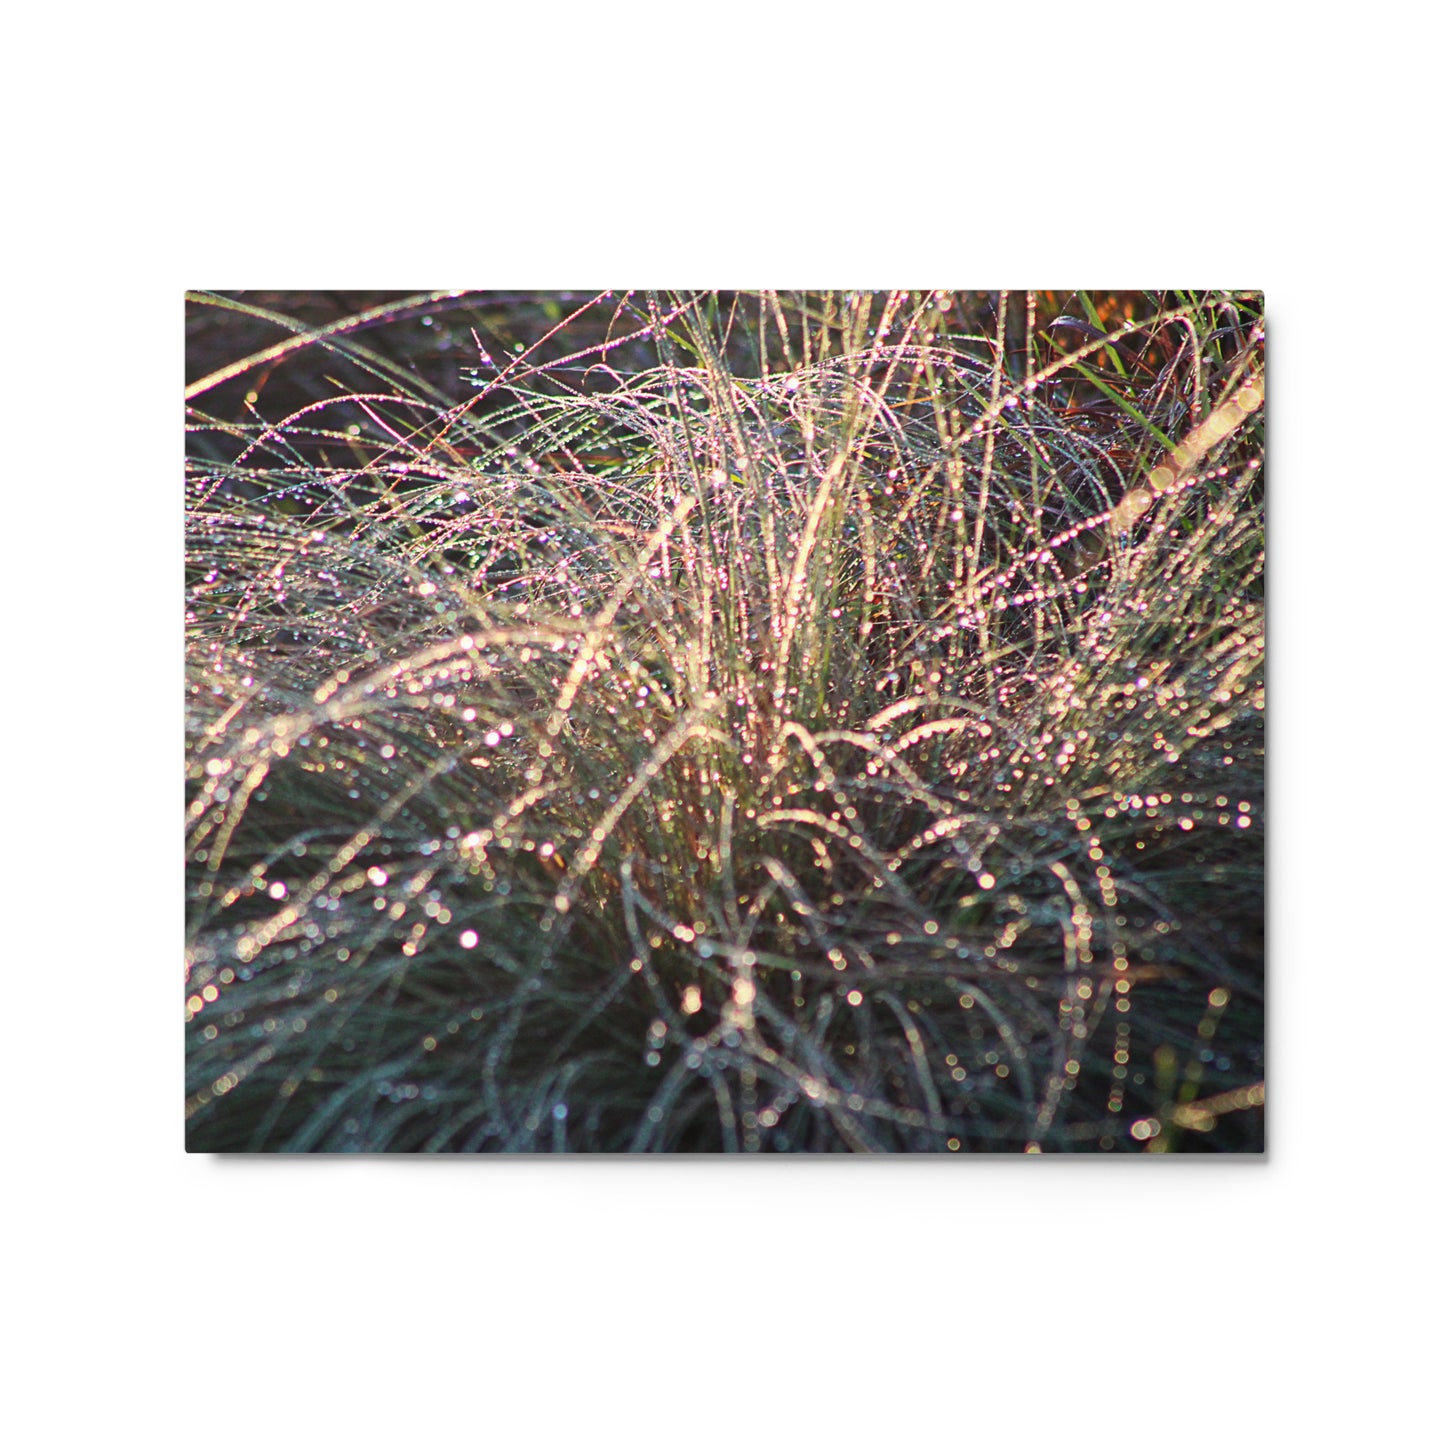 Grass 3 by C. Kovalick